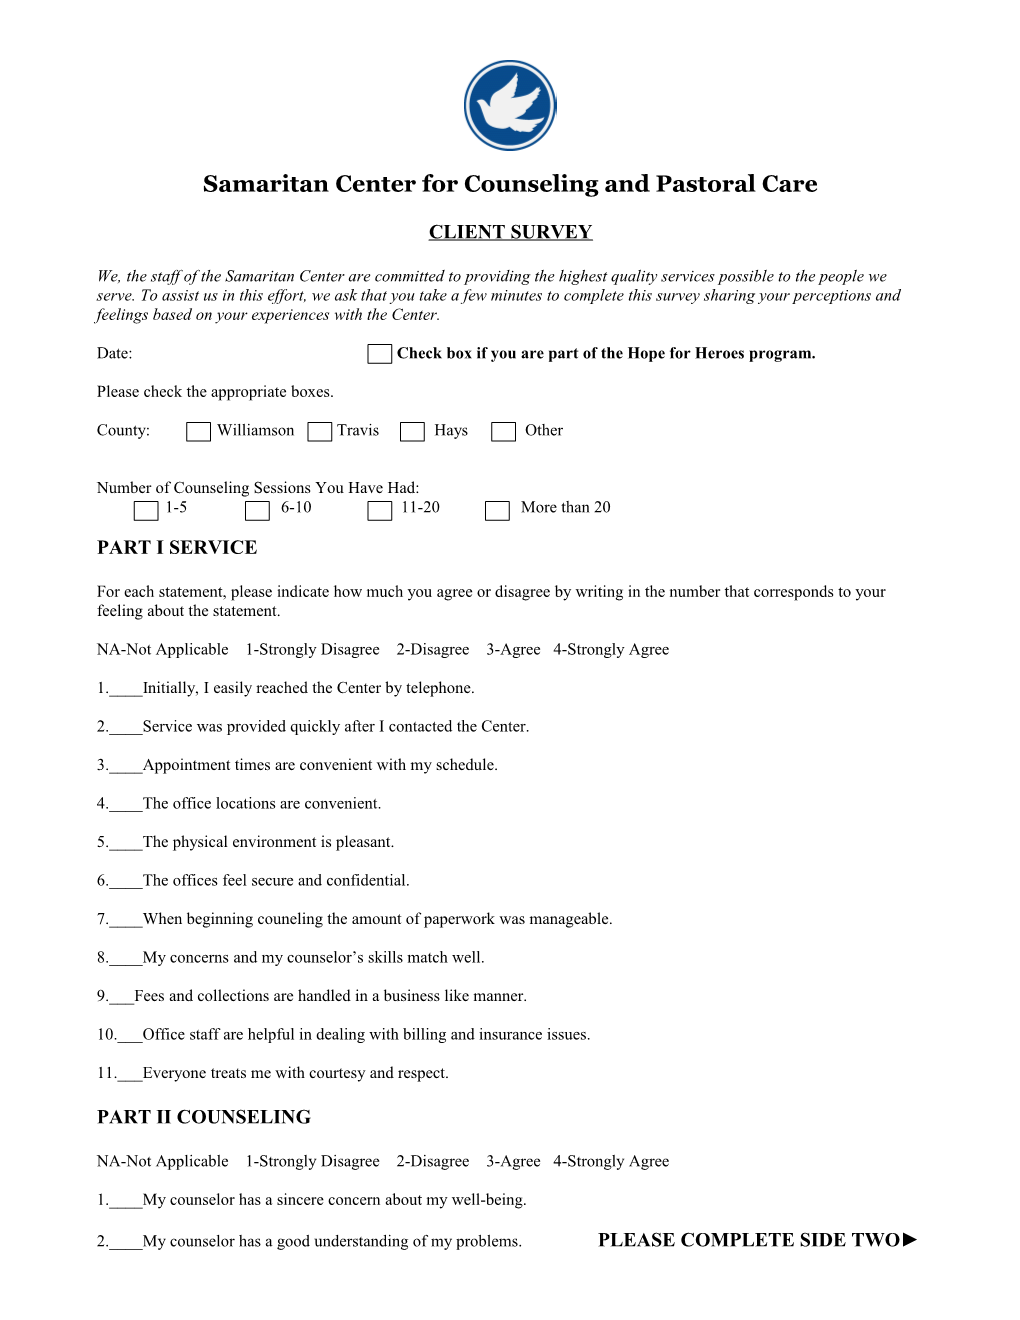 Samaritan Center for Counseling & Pastoral Care